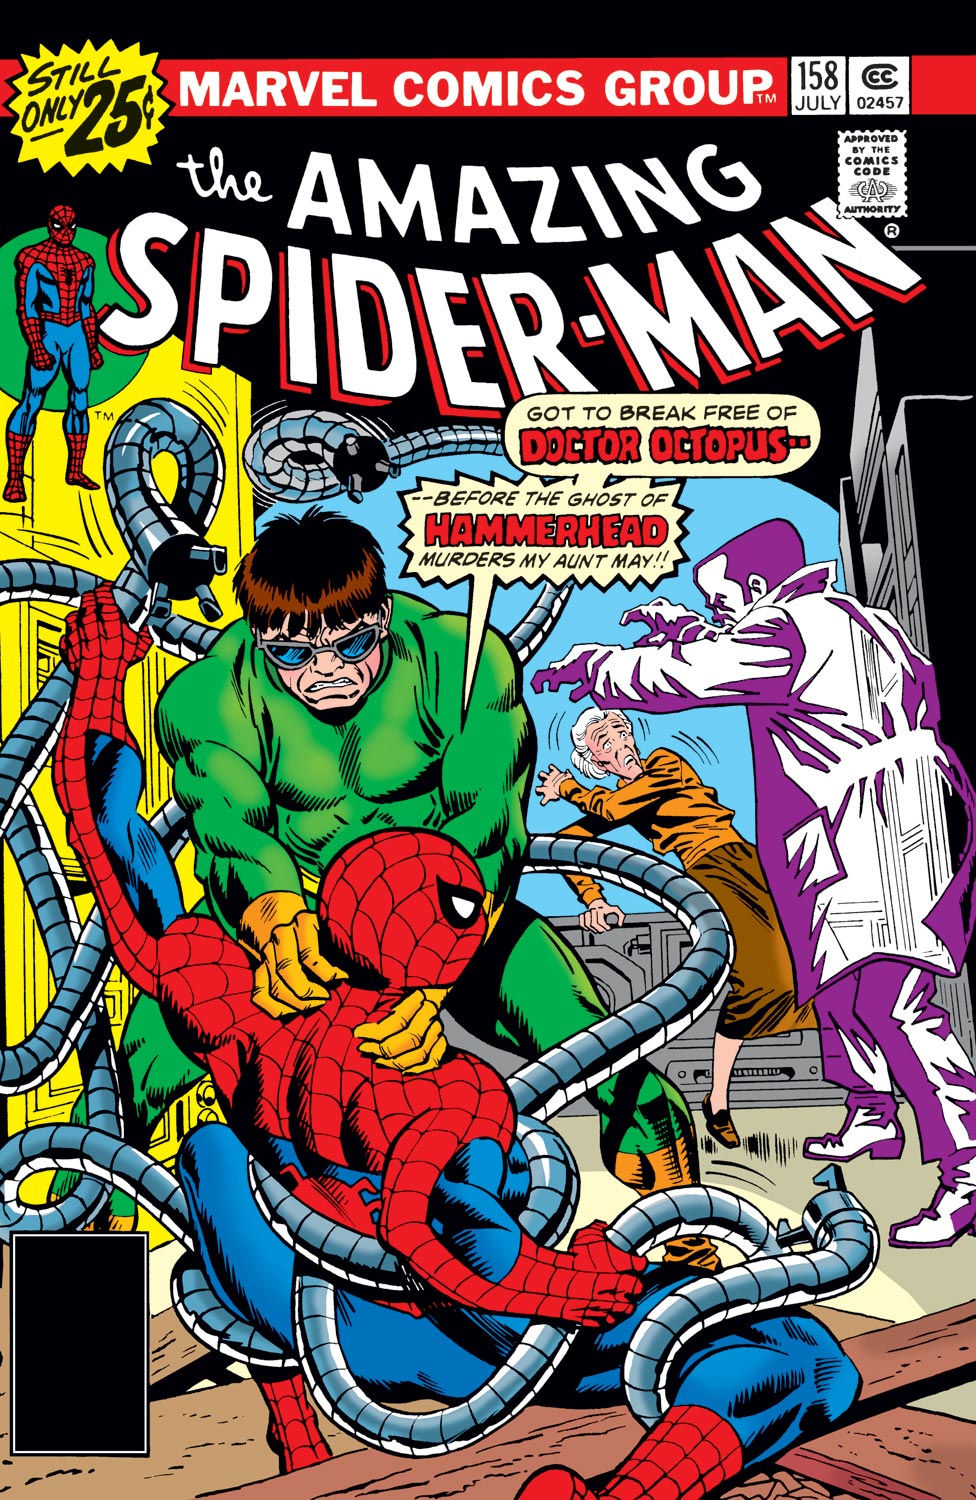 The Amazing Spider-Man (1963) #158